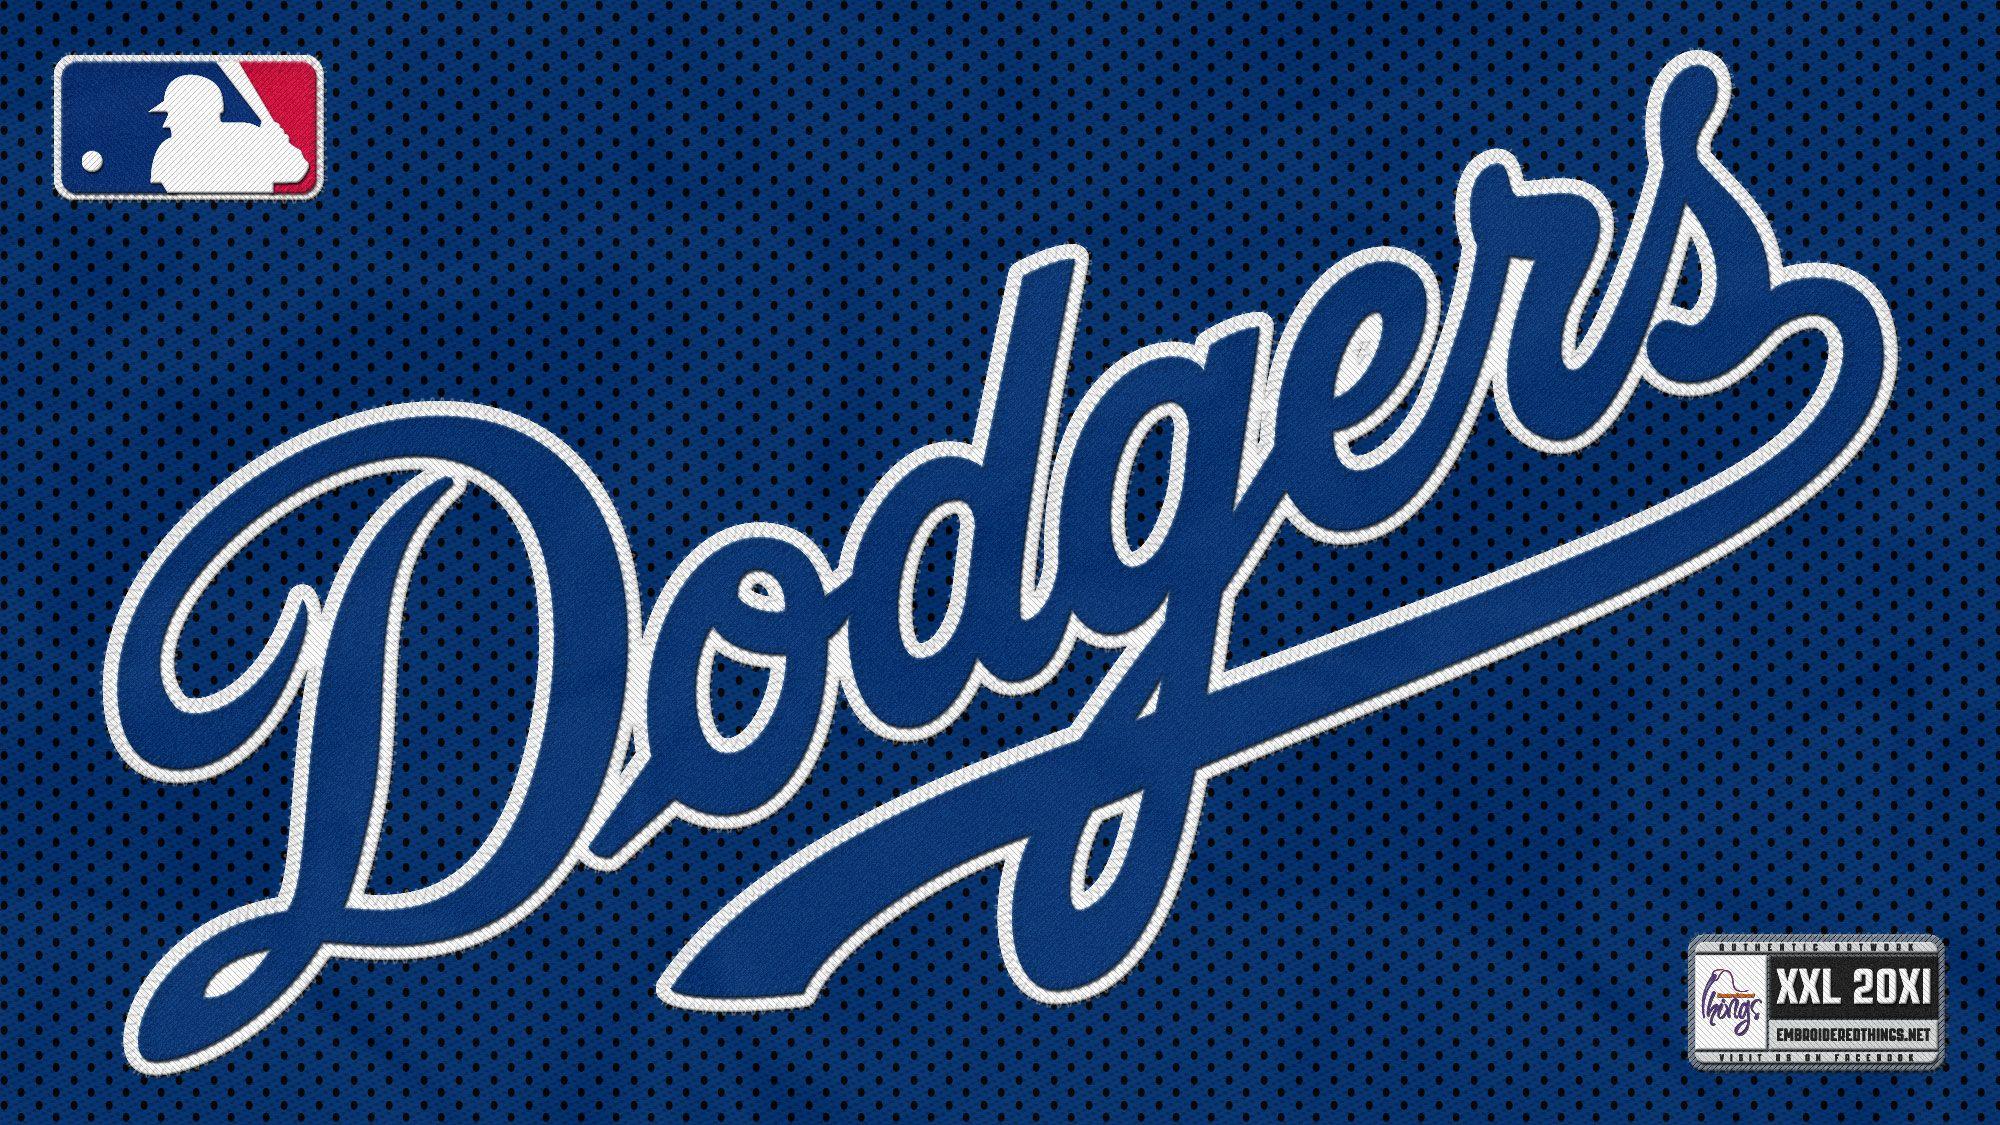 Dodgers 1080P, 2K, 4K, 5K HD wallpapers free download